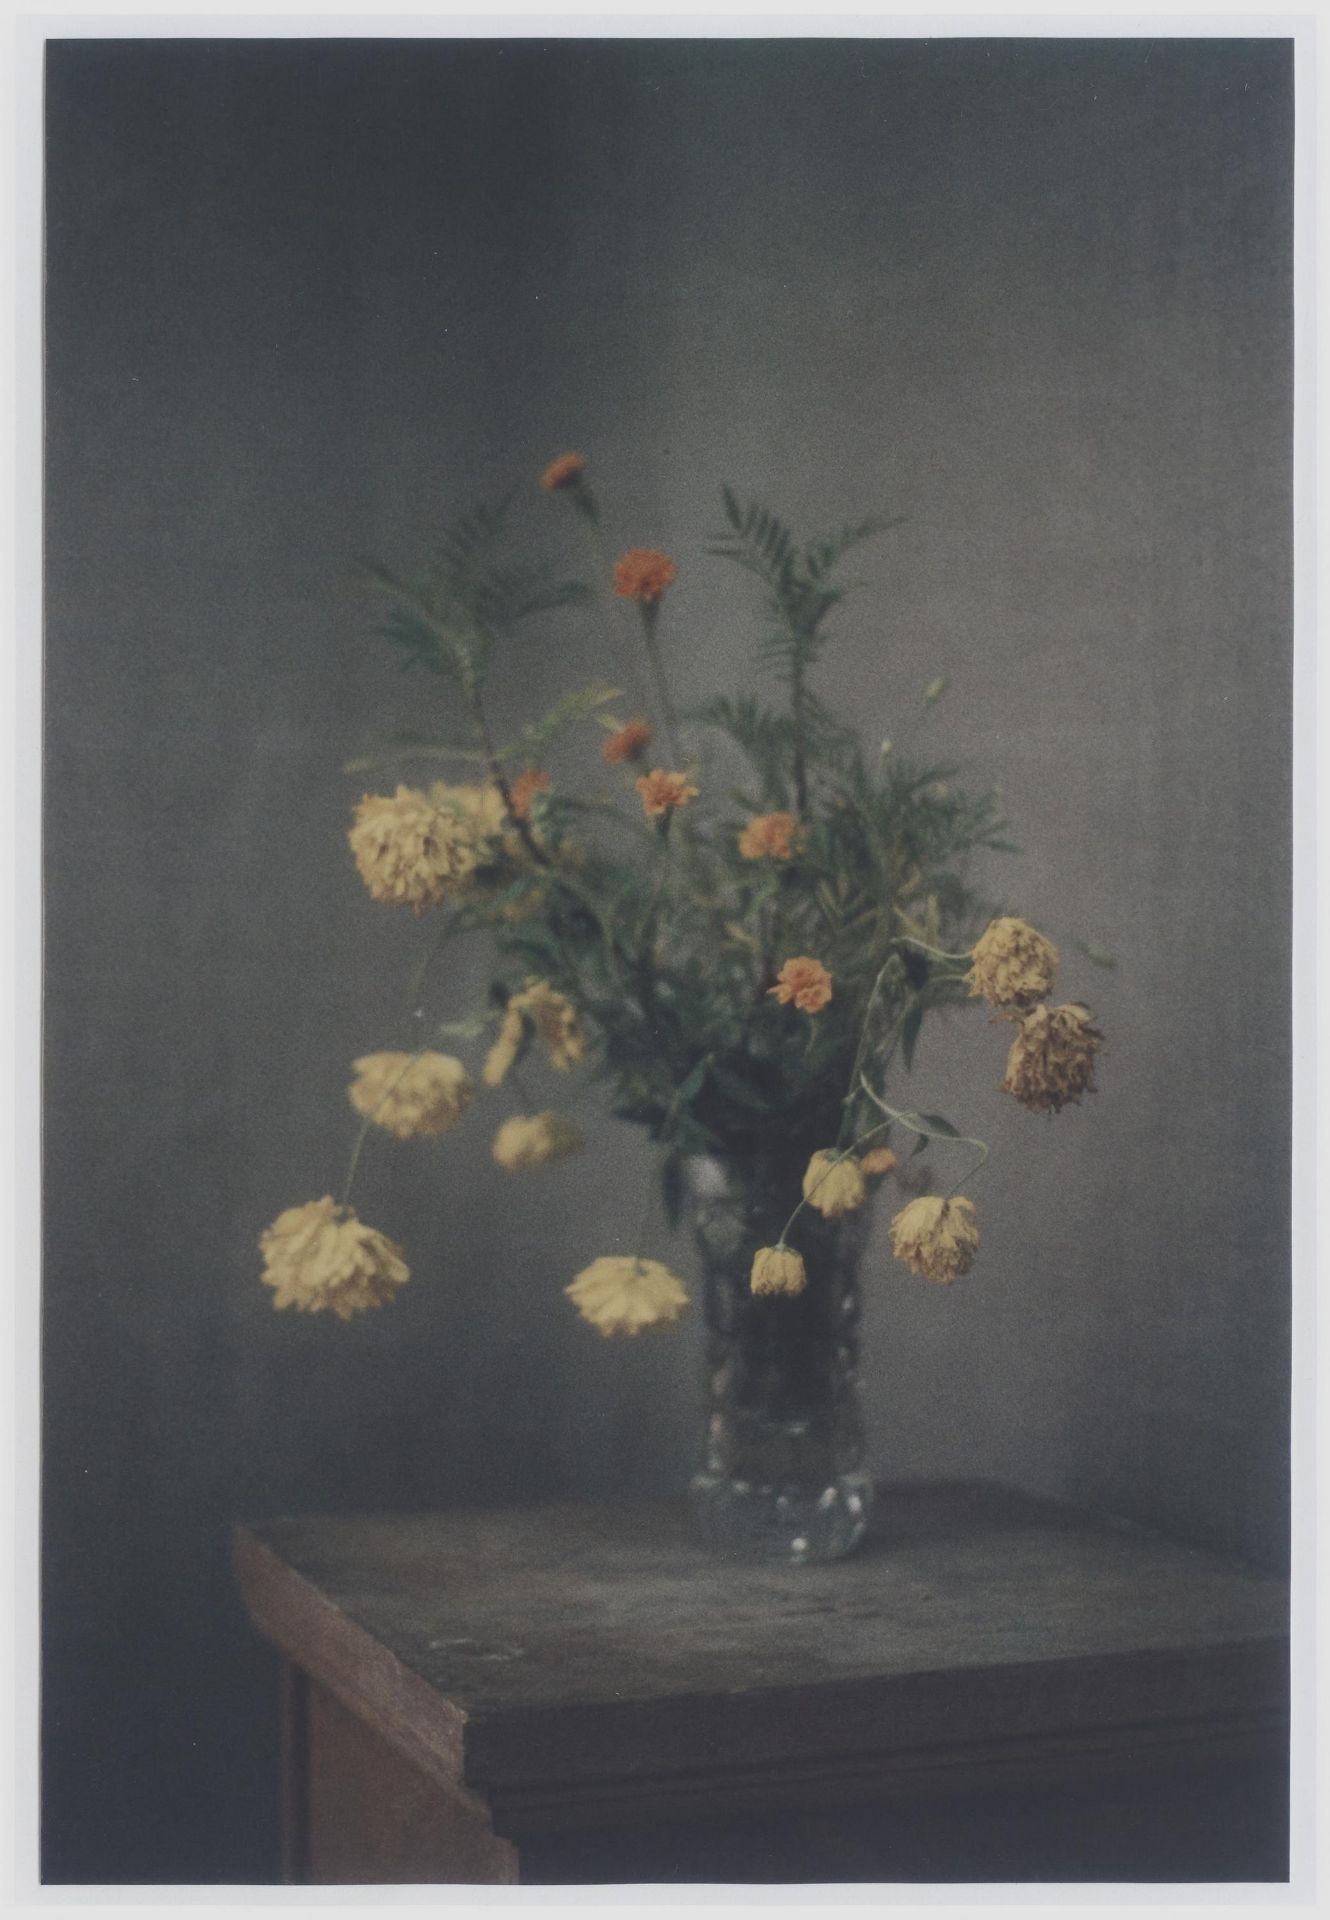 KERBER, INGA1982 BerlinTitel: Cliché of a flower bouquet X (5-teiliges Werk). Datierung: 2012. - Image 11 of 16